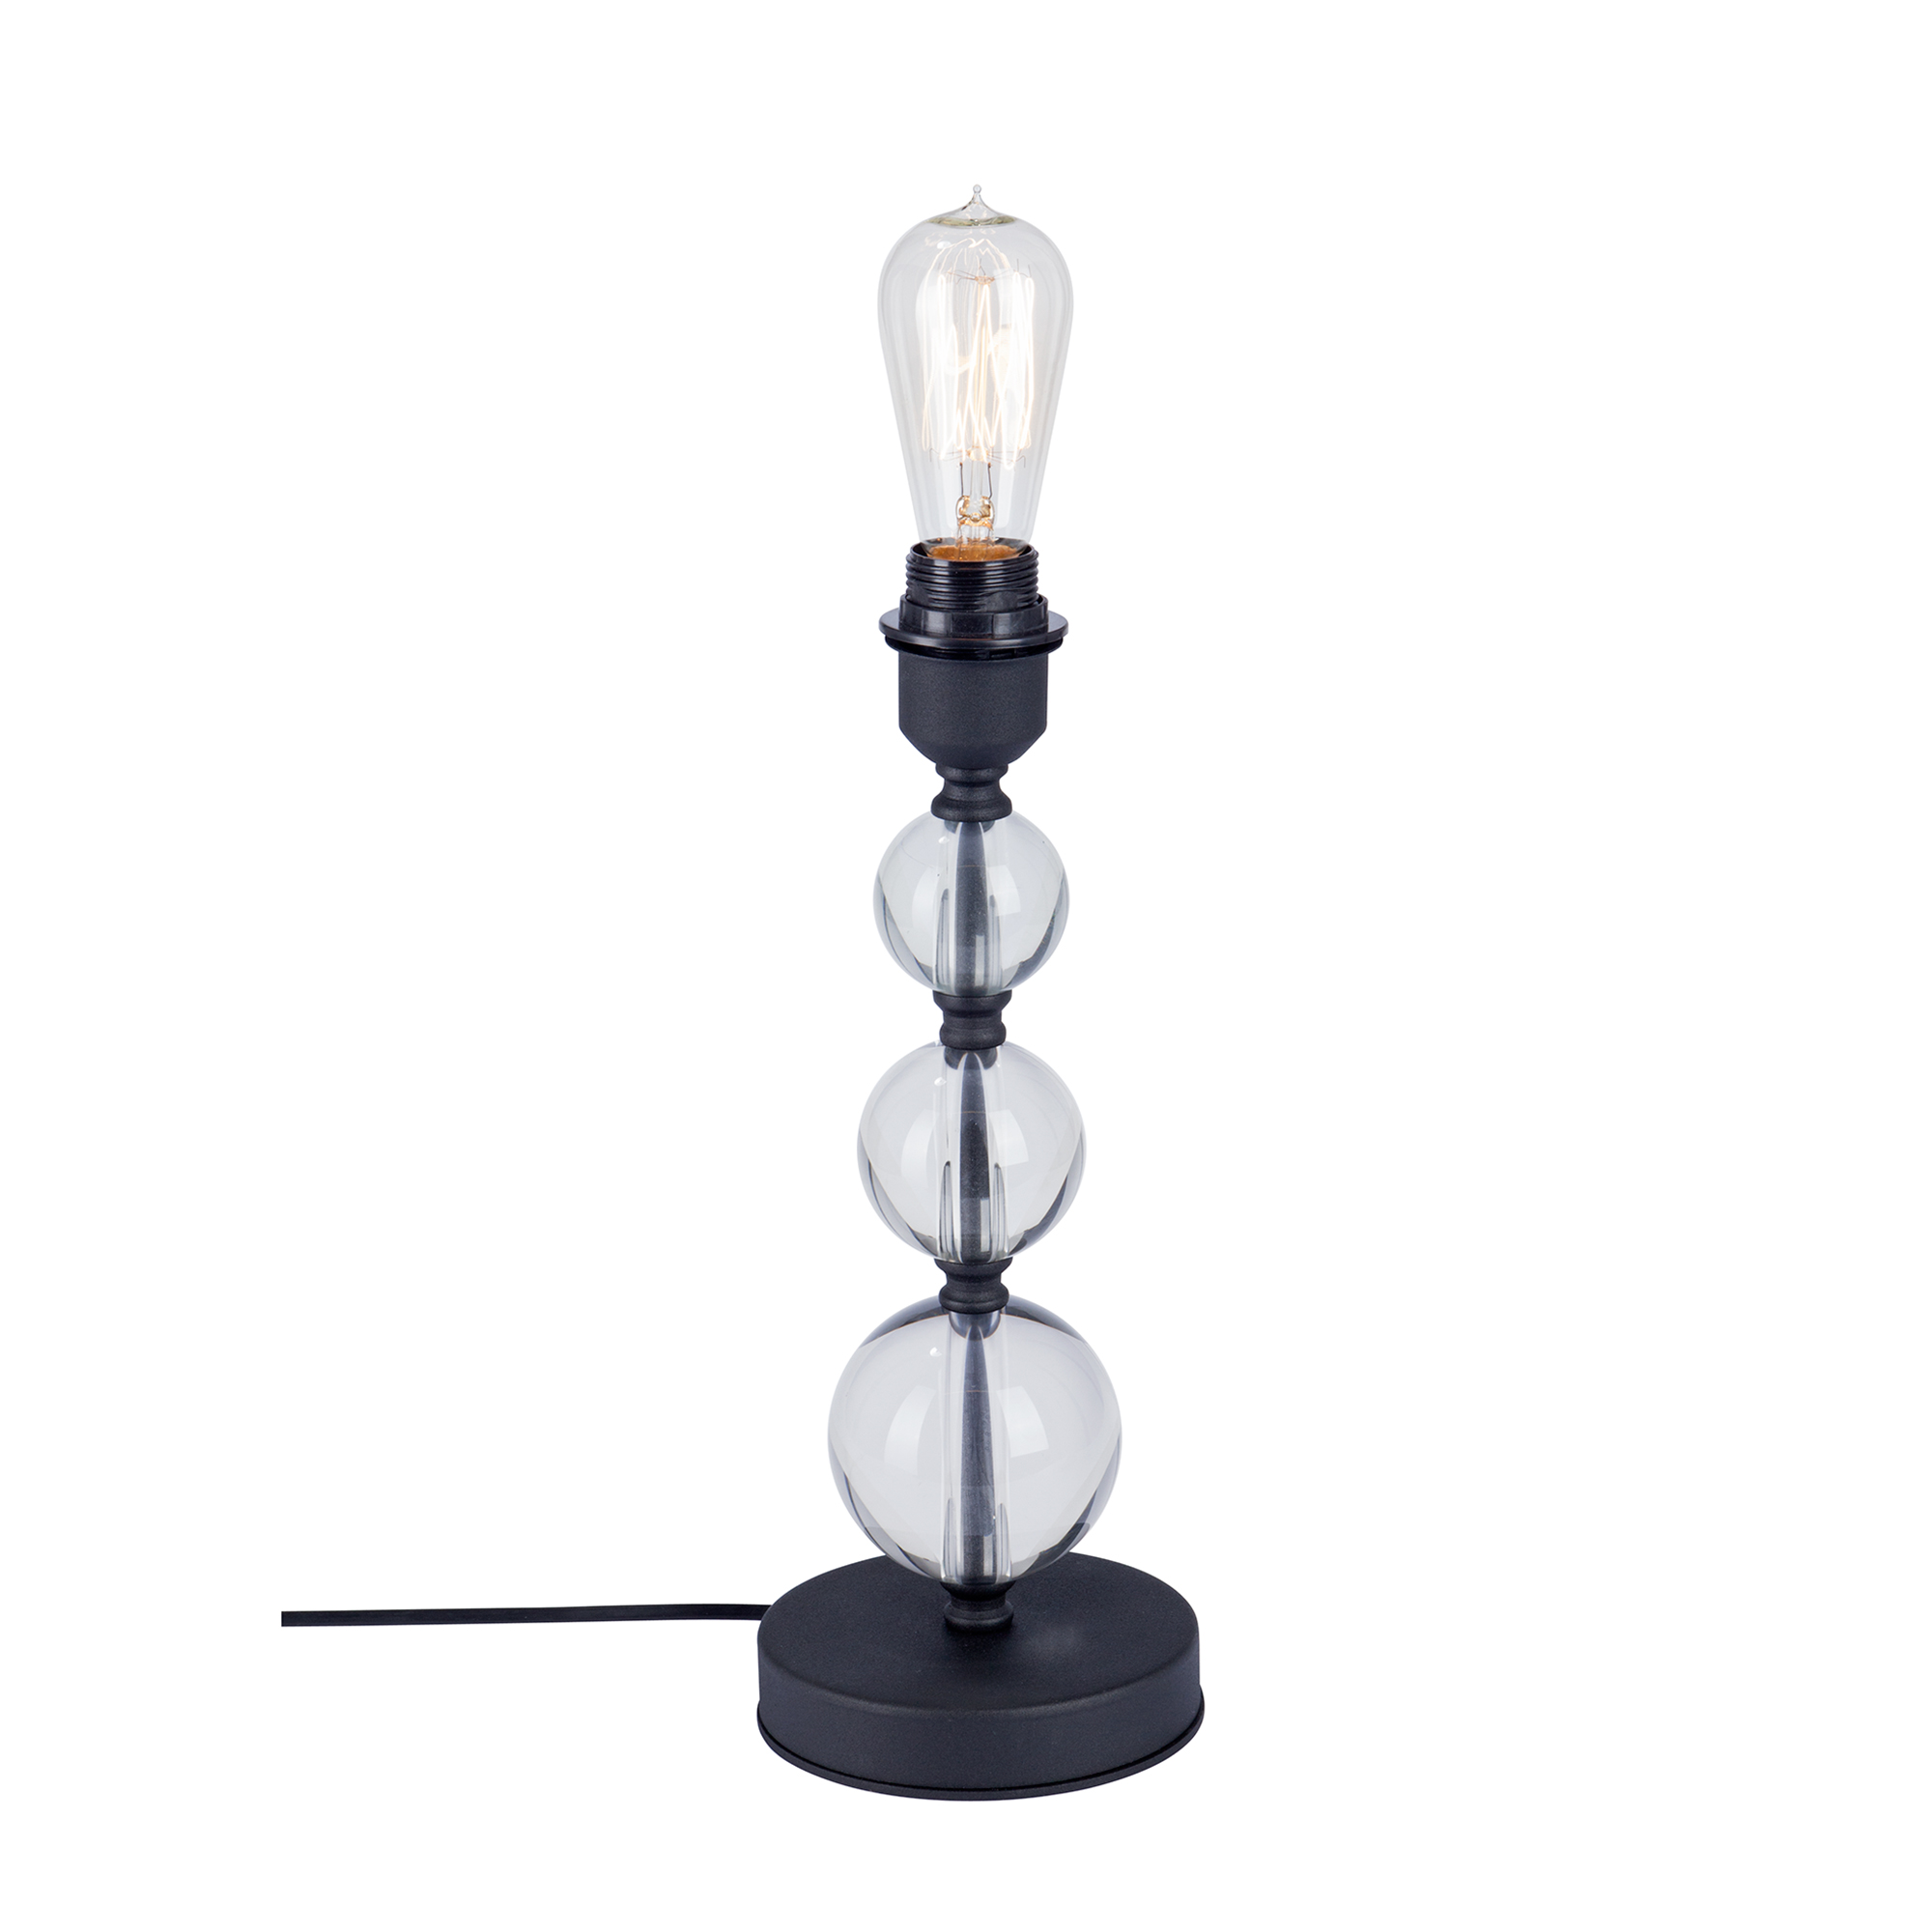 Декоративная настольная лампа Vitaluce V2939-1/1L, цвет черный;матовый V2939-1/1L - фото 1